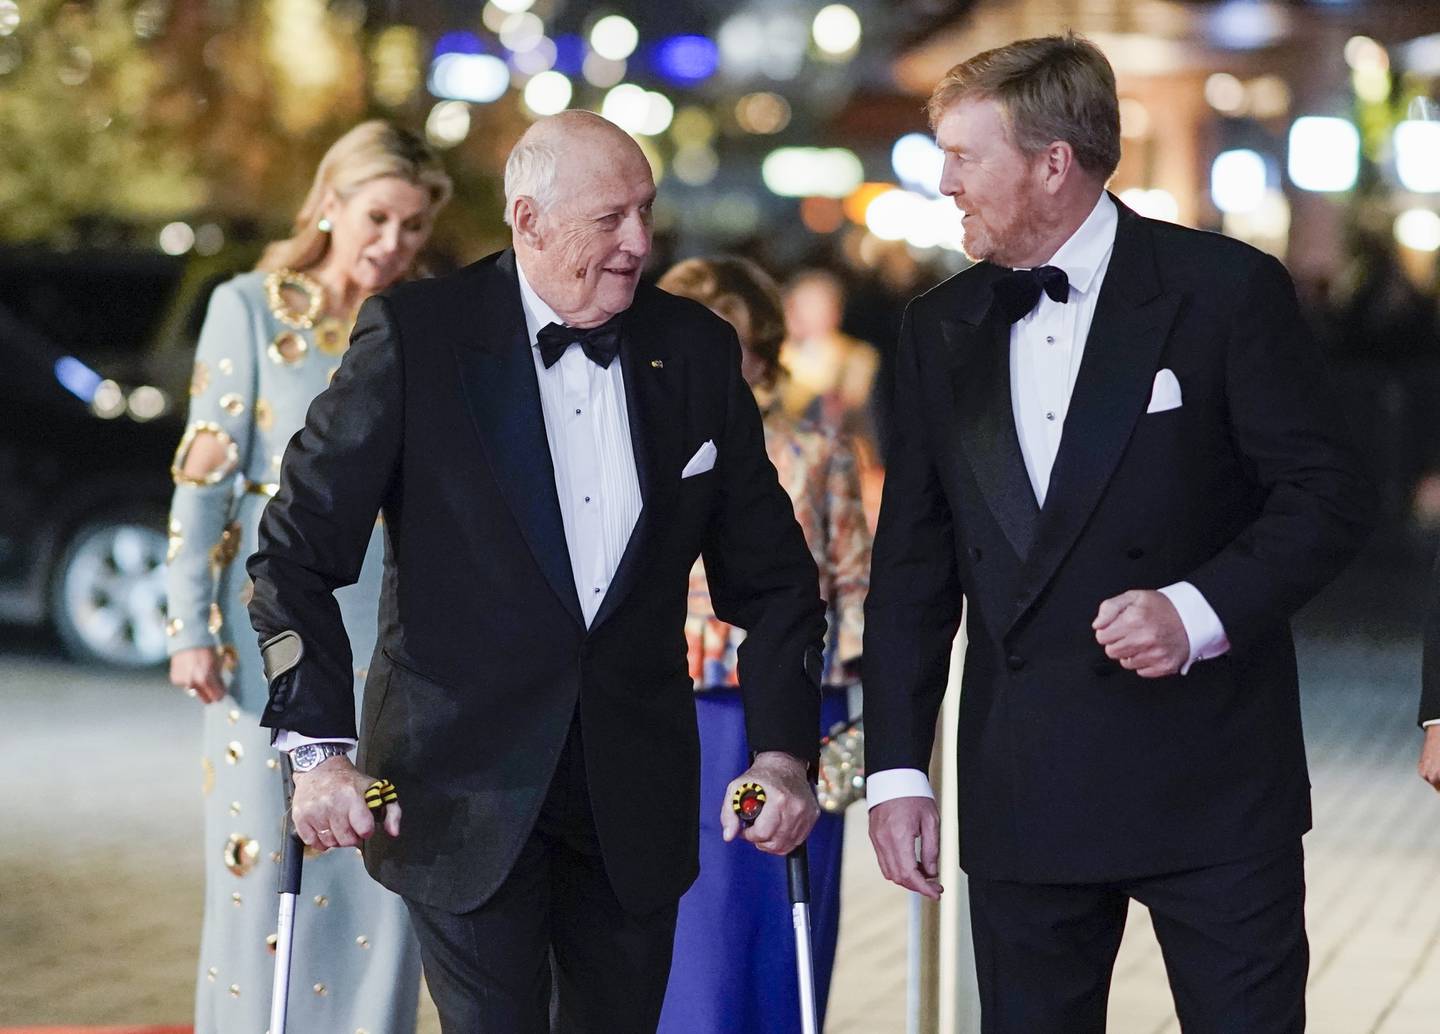 Kong Willem-Alexander og dronning Máxima av Nederland var i høst på statsbesøk i Norge. Her under et besøk på Munch-museet i Oslo sammen med kong Harald og dronning Sonja.